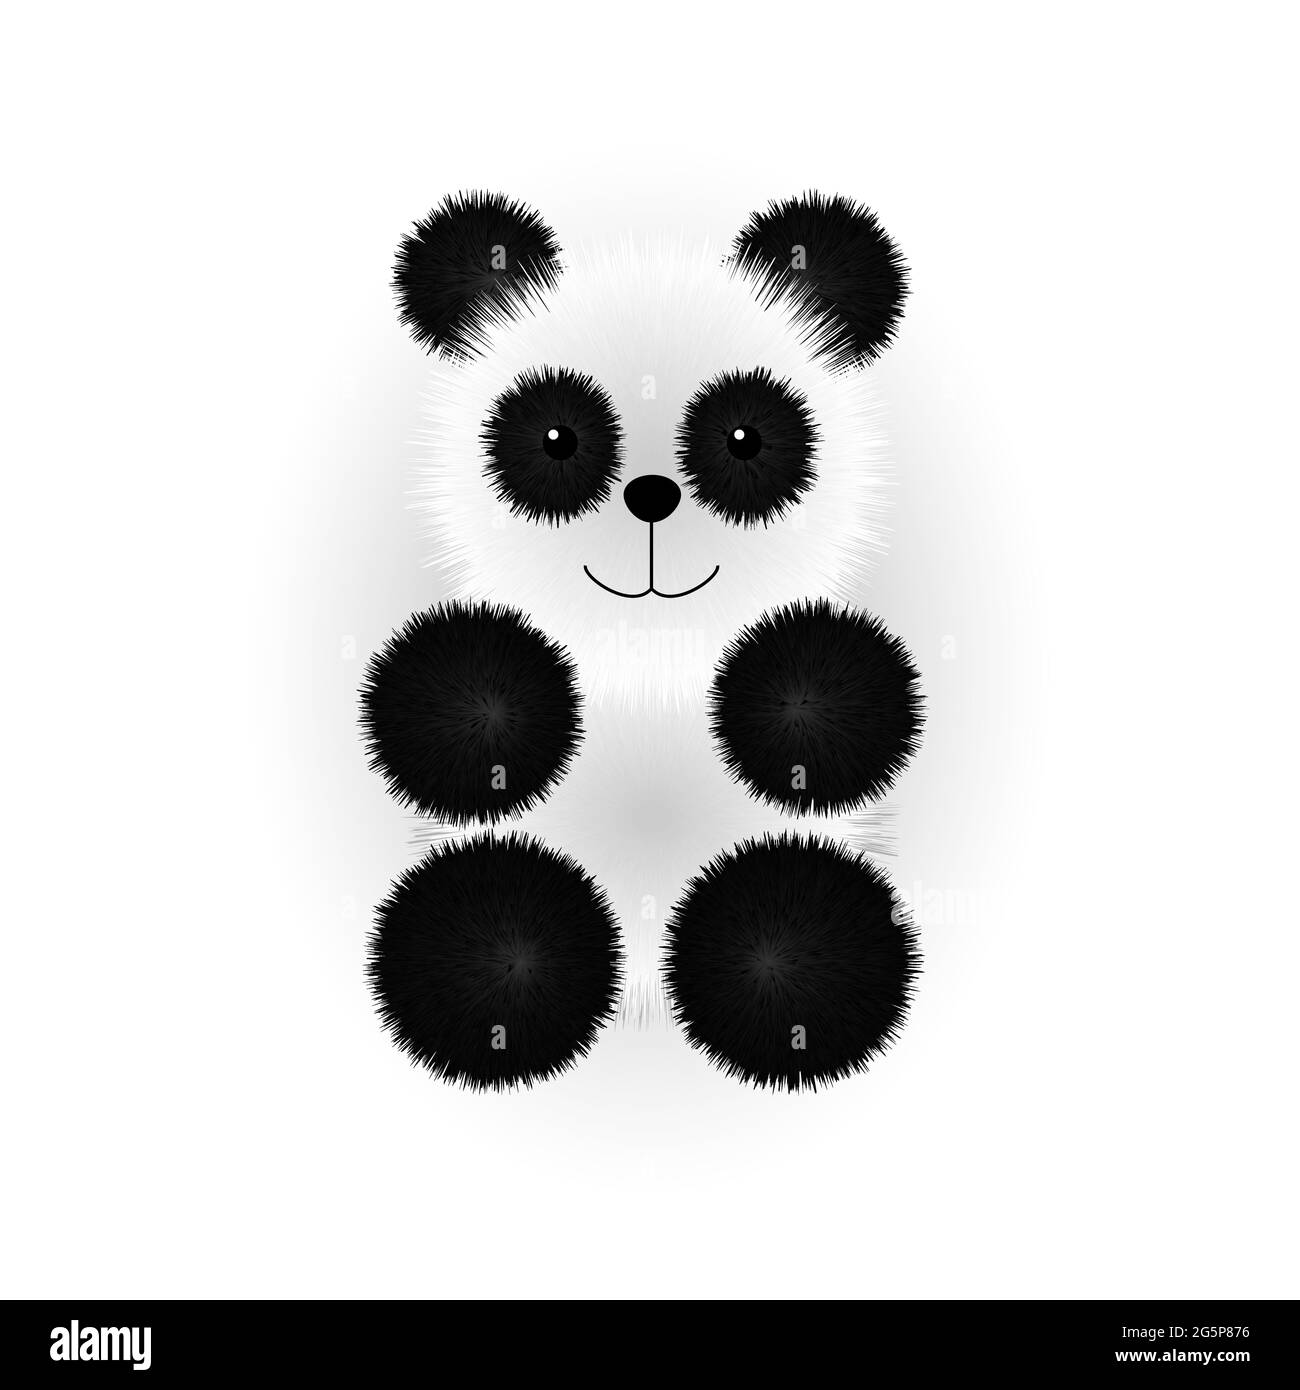 Panda wallpaper Black and White Stock Photos & Images - Alamy